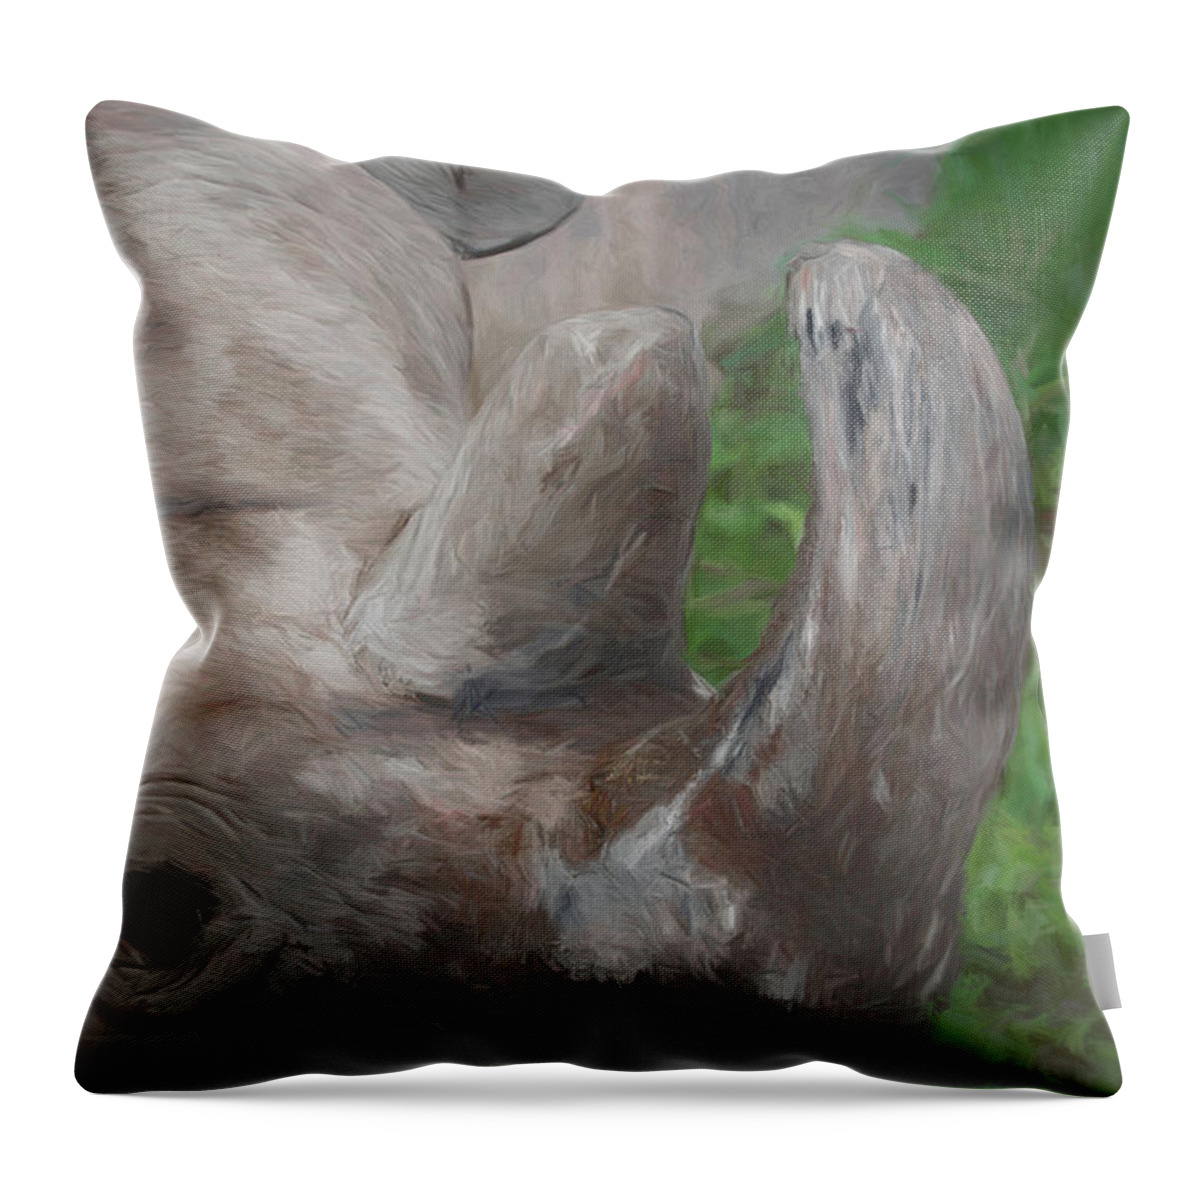 Black Rhino Throw Pillow featuring the digital art The Rhino by Ernest Echols